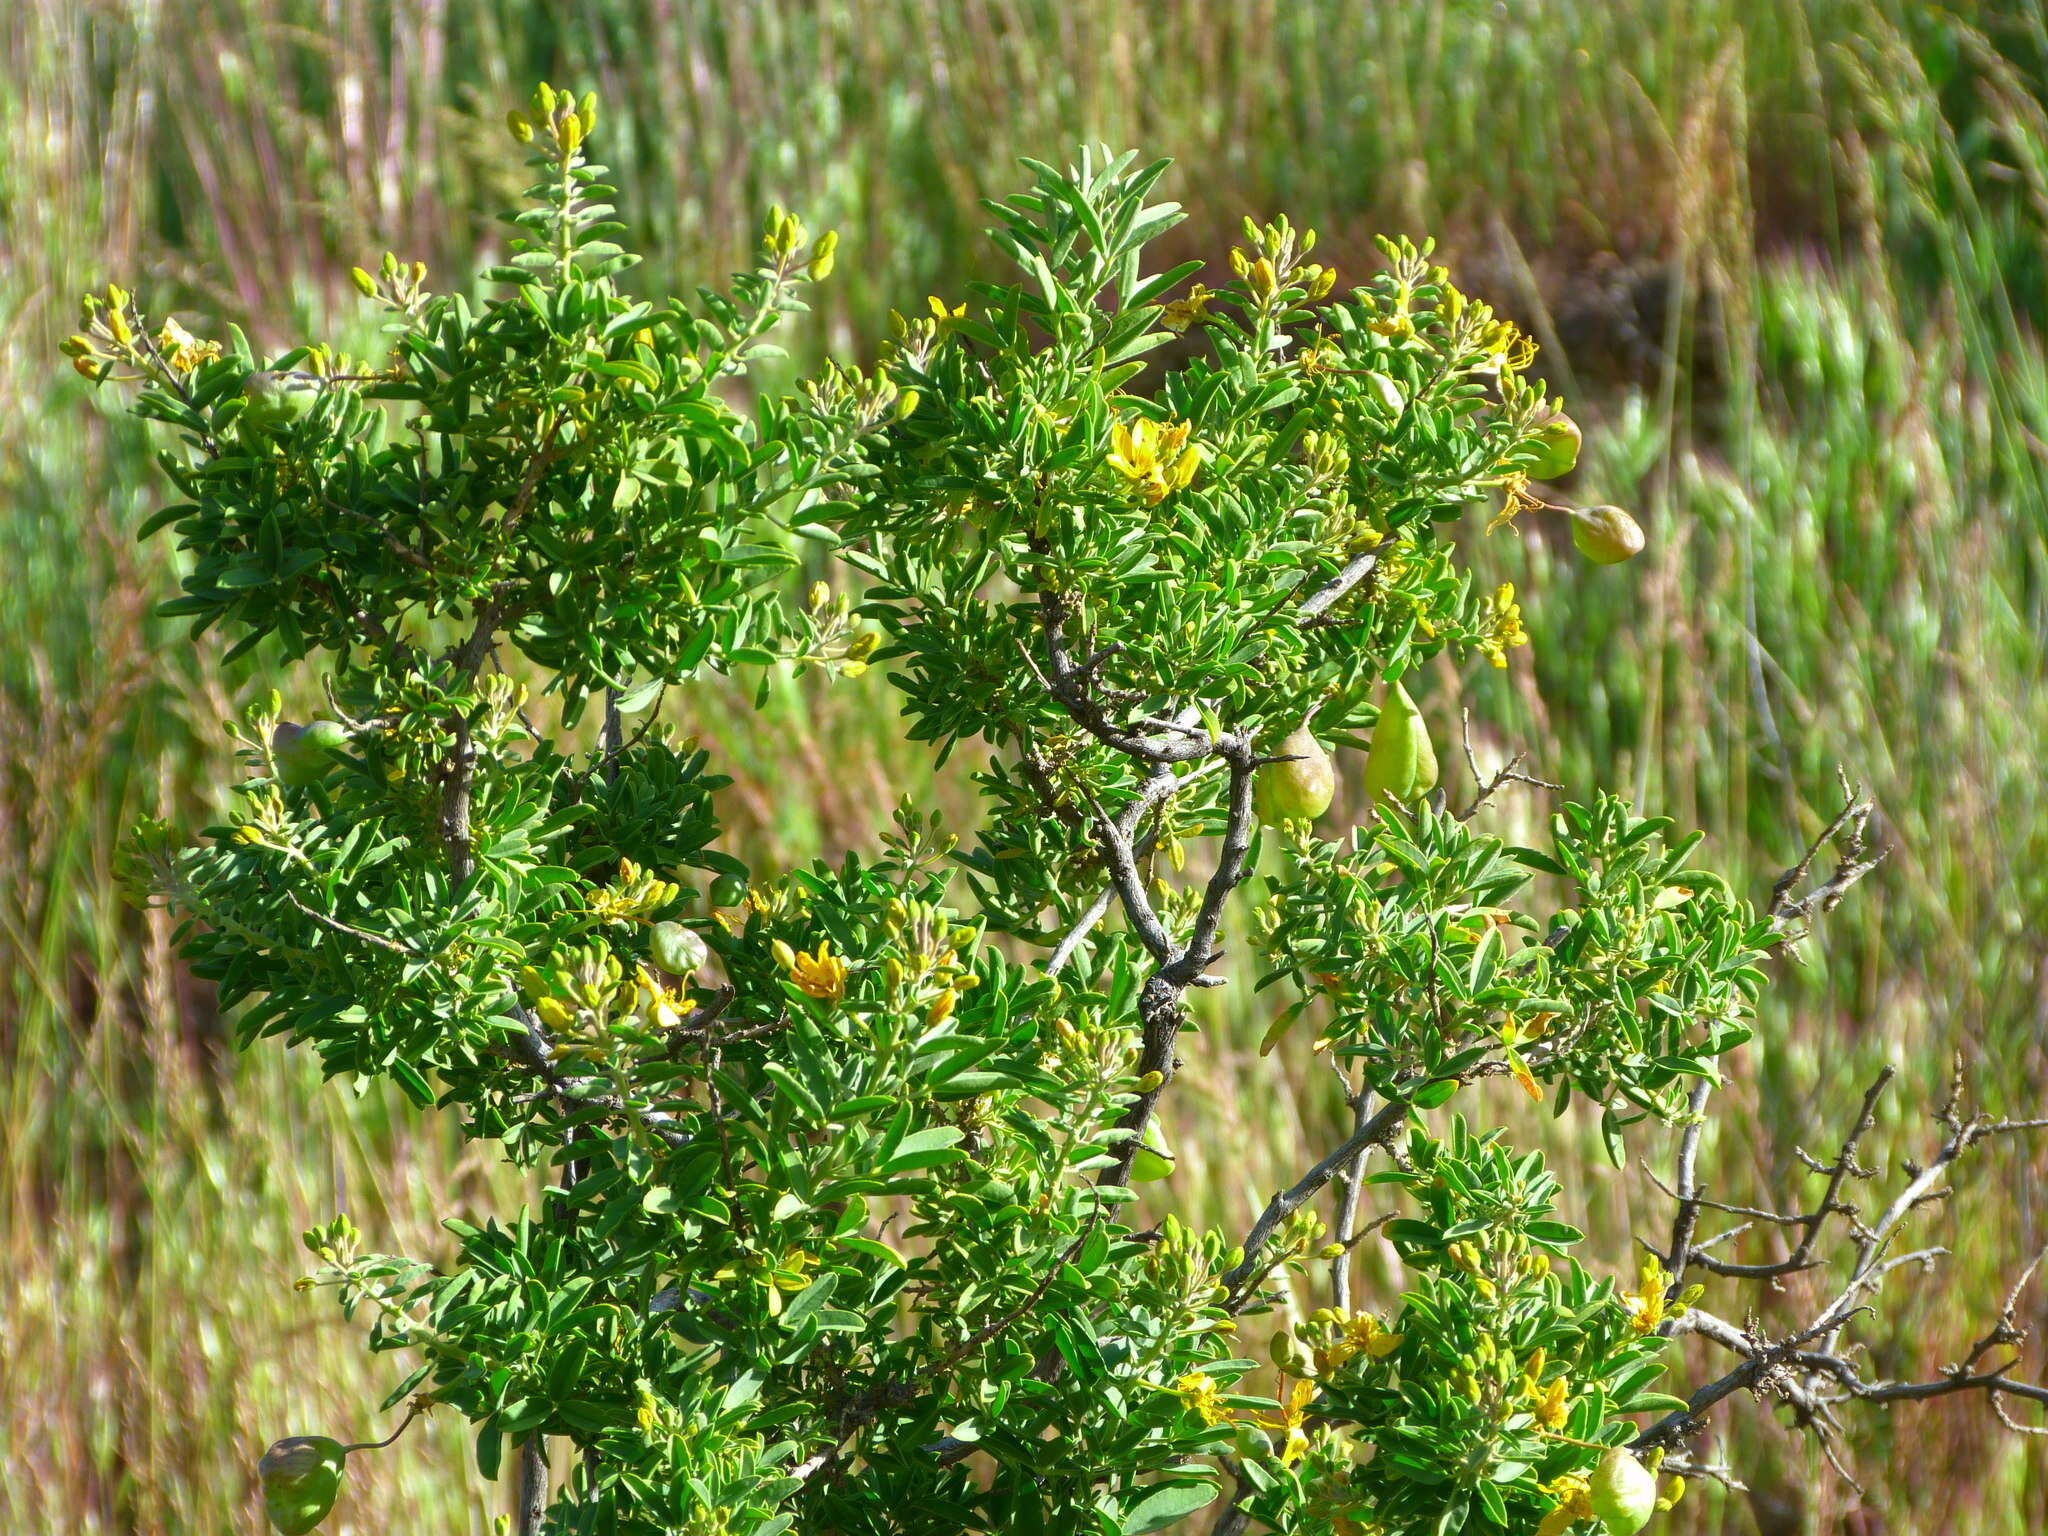 Image of Cleomella arborea var. globosa (Coville) J. C. Hall & Roalson